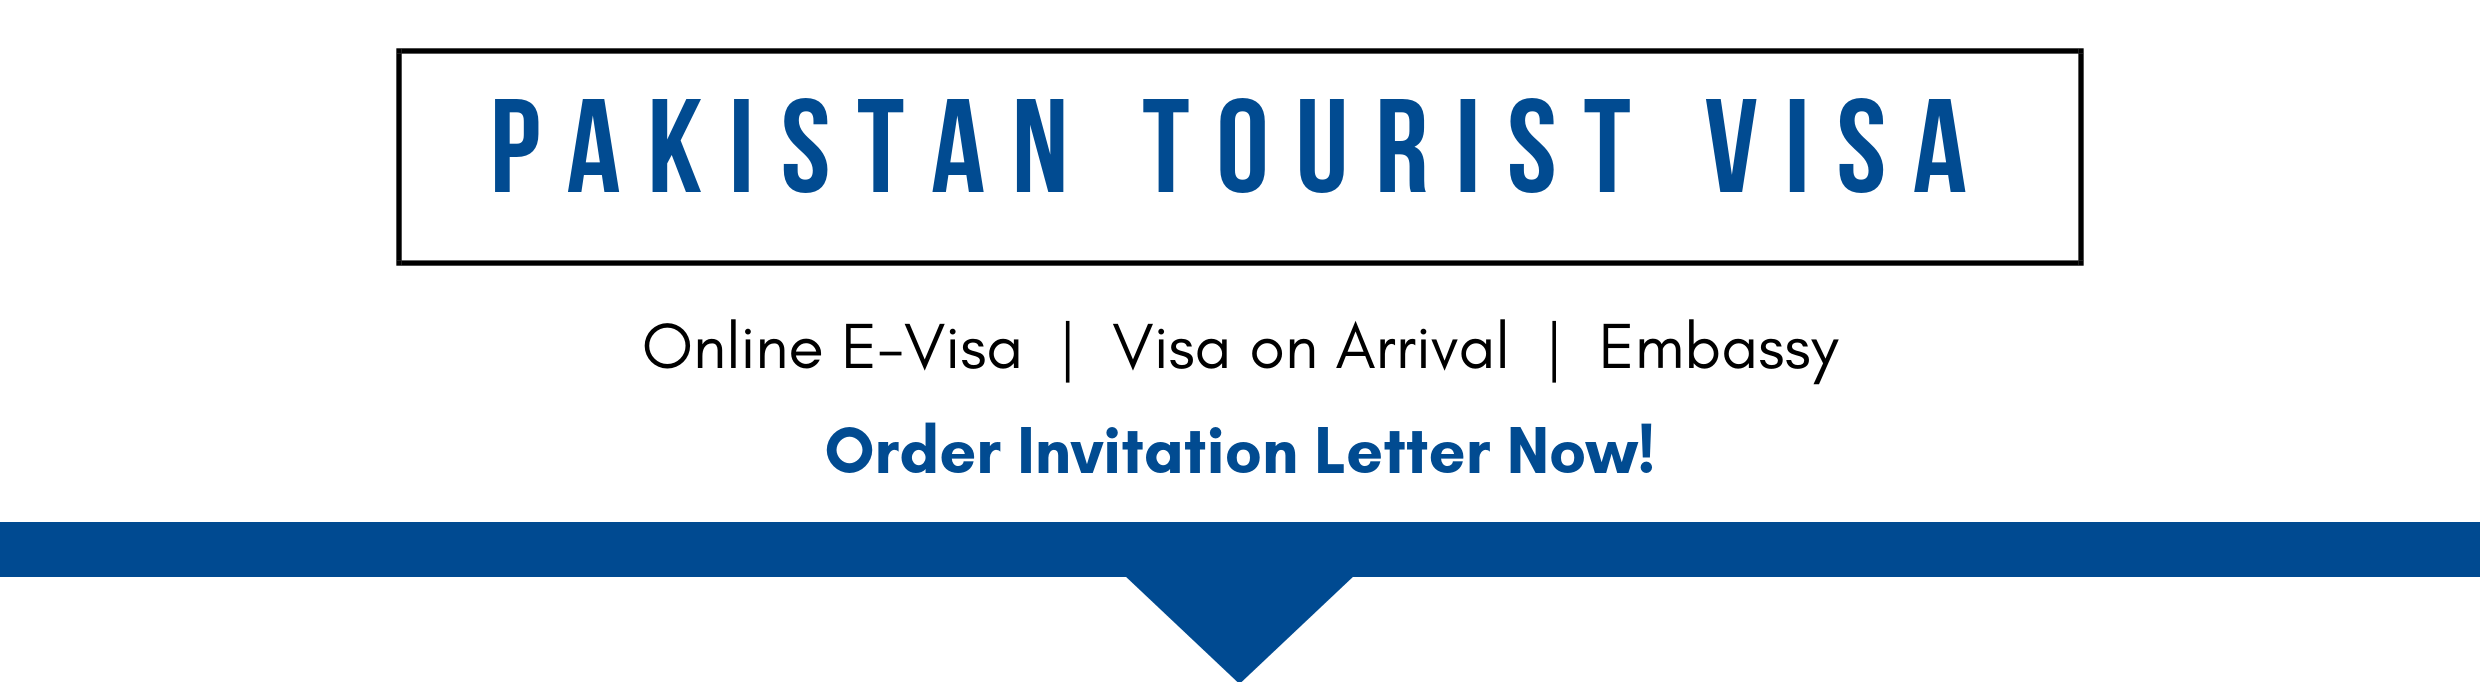 Pakistan Tourist Visa Pakistan S No 1 Travel Co 2020